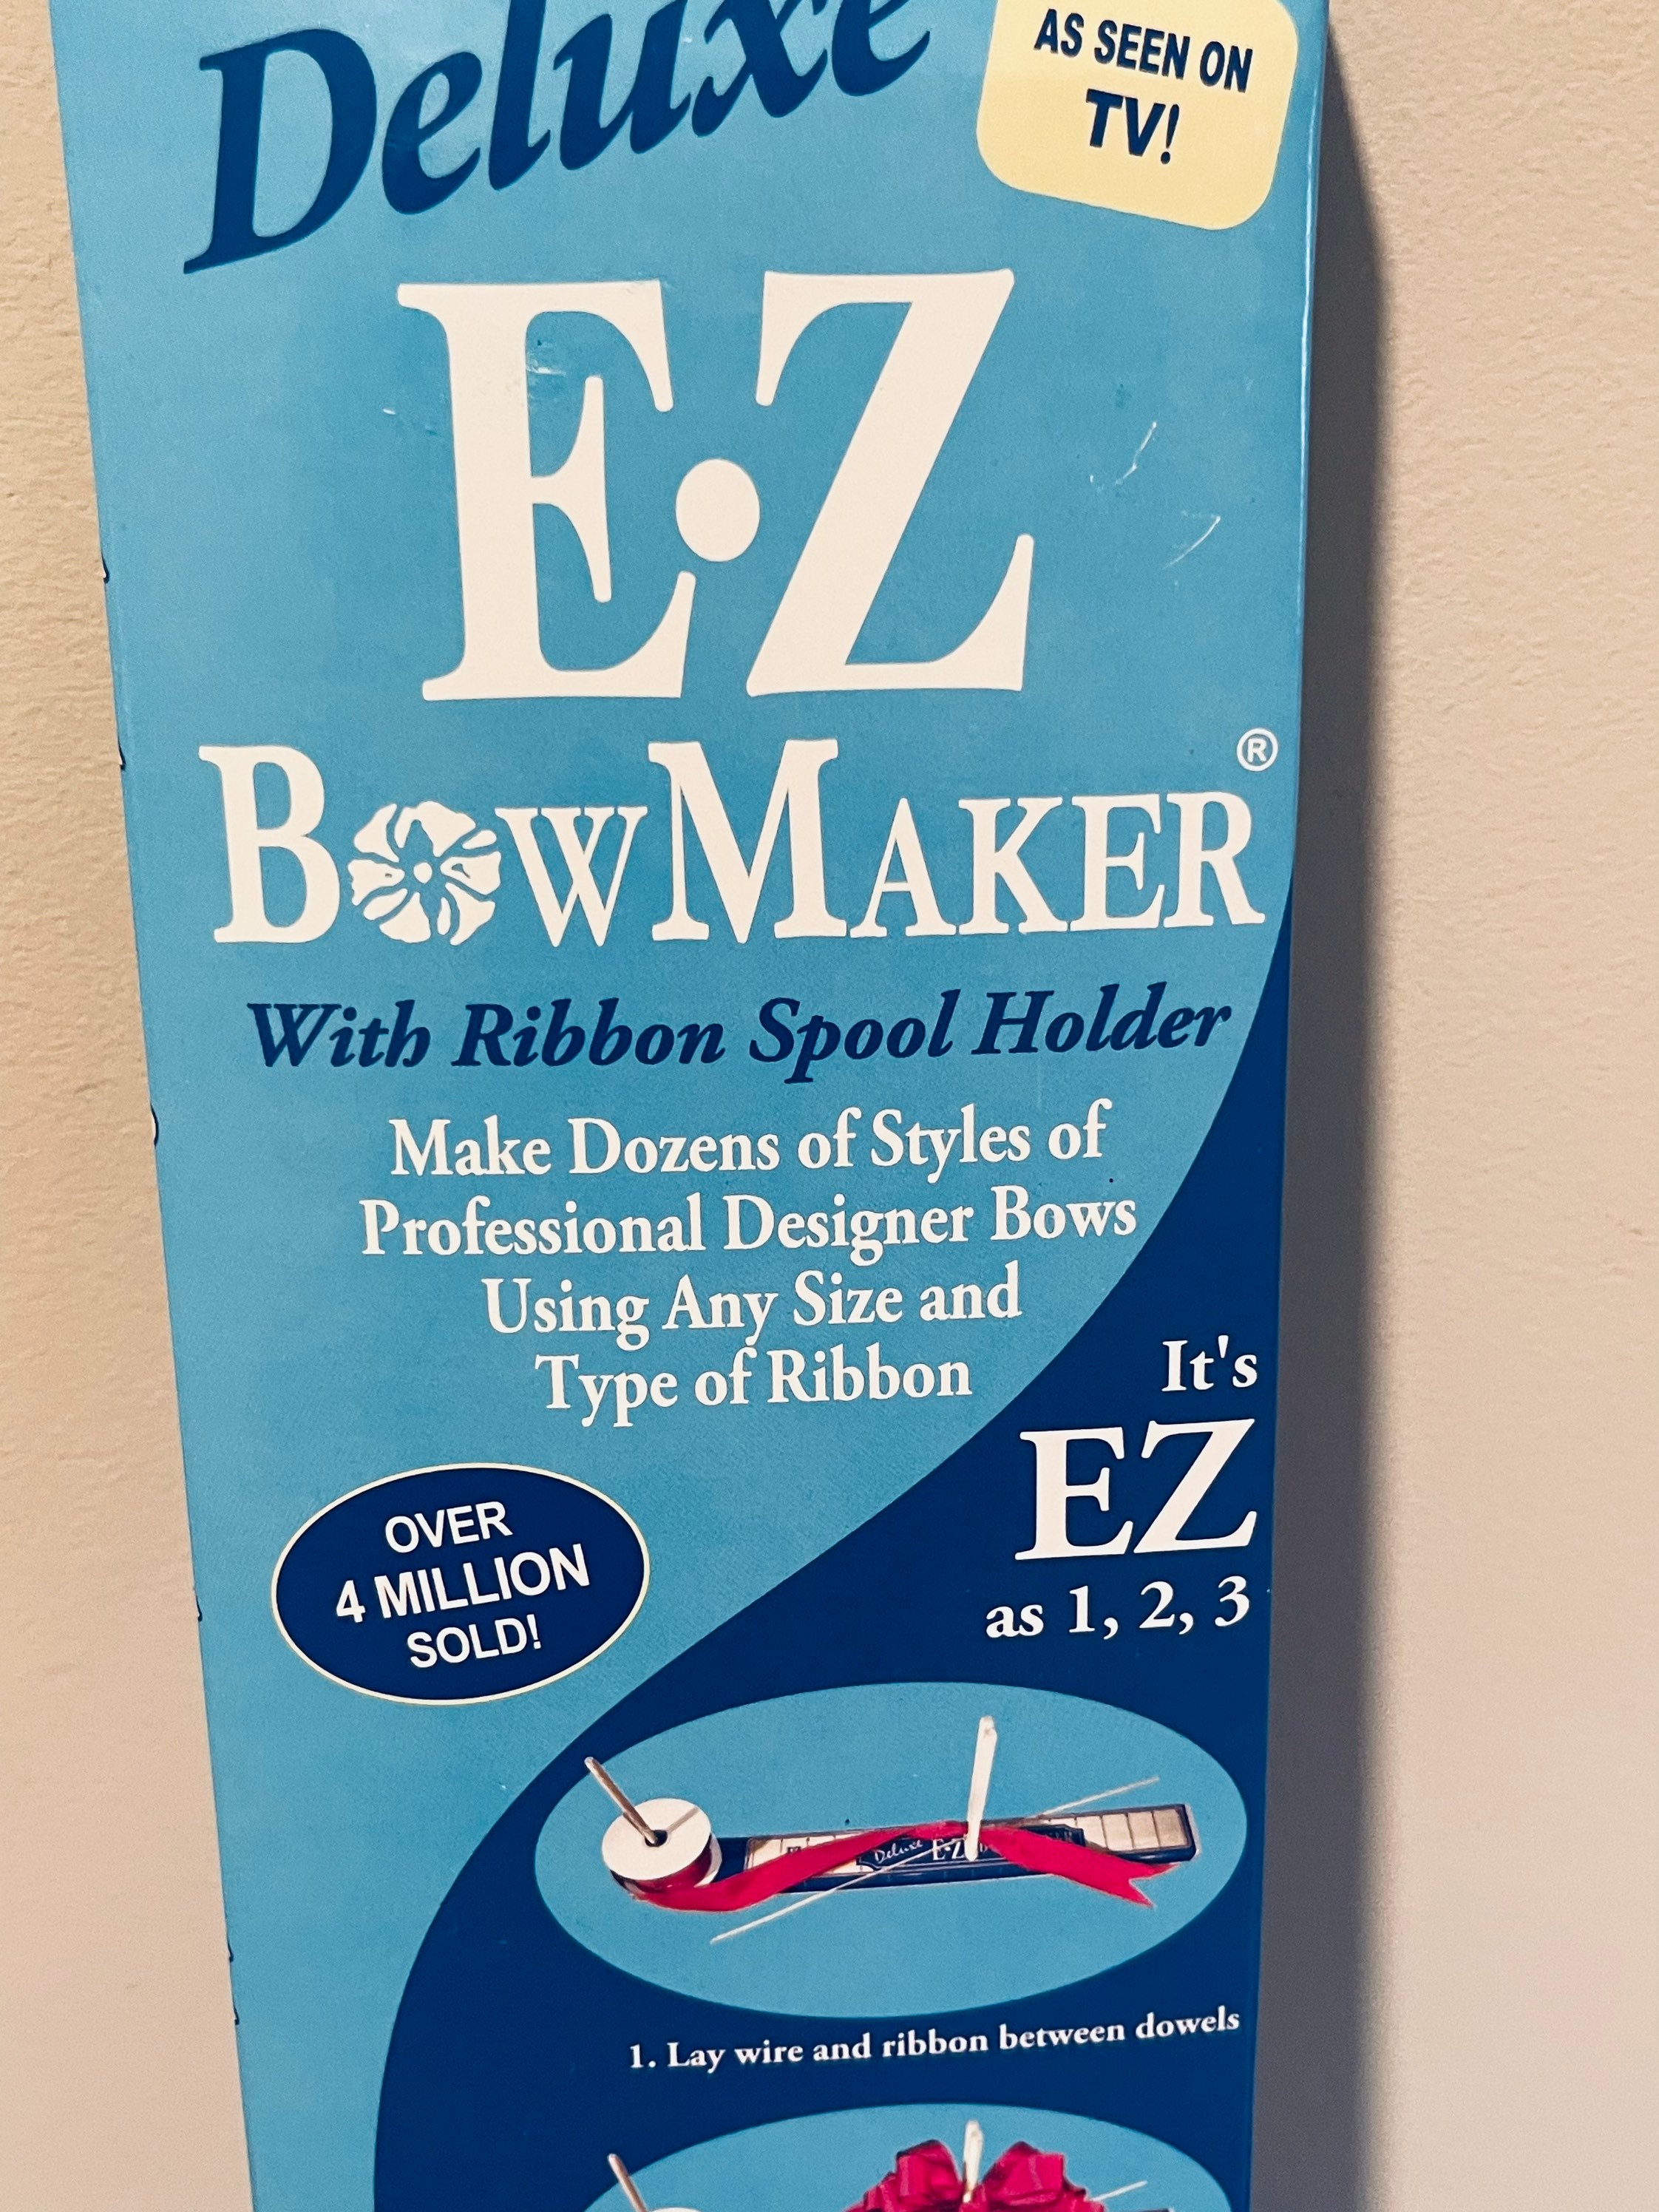 Delux EZ Bowmaker - Bow Making Tool - Craftng Bowmaker - Professional Designer Bow Maker, Size: One Size